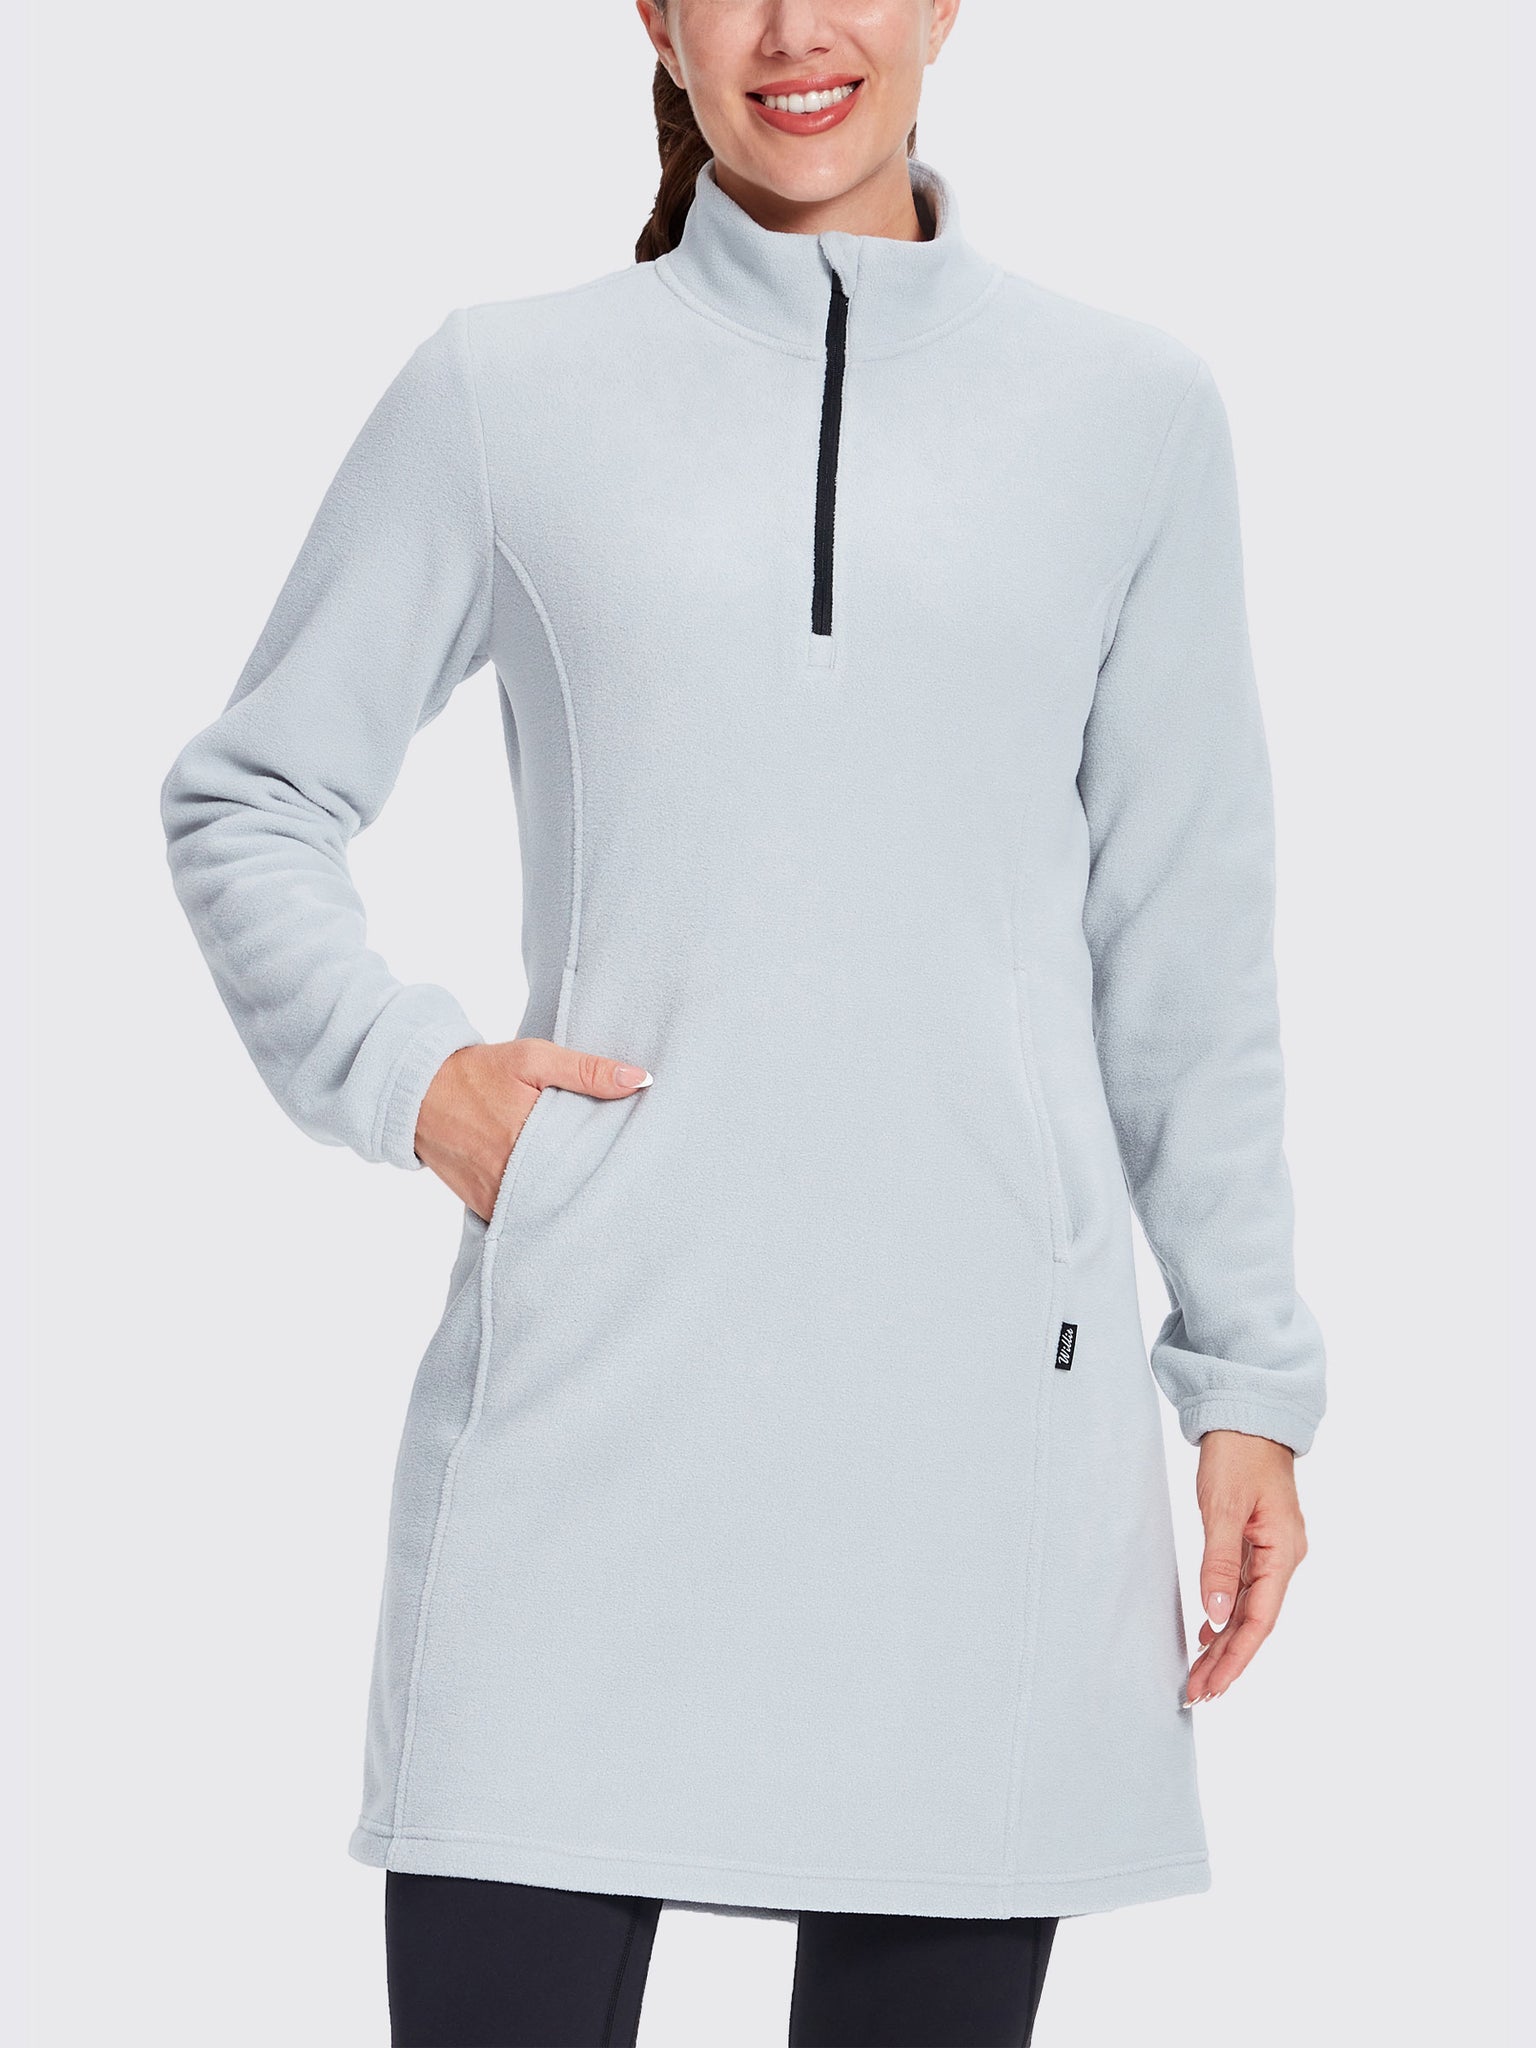 Women's Fleece Long-Sleeve Turtleneck Dress Gray1